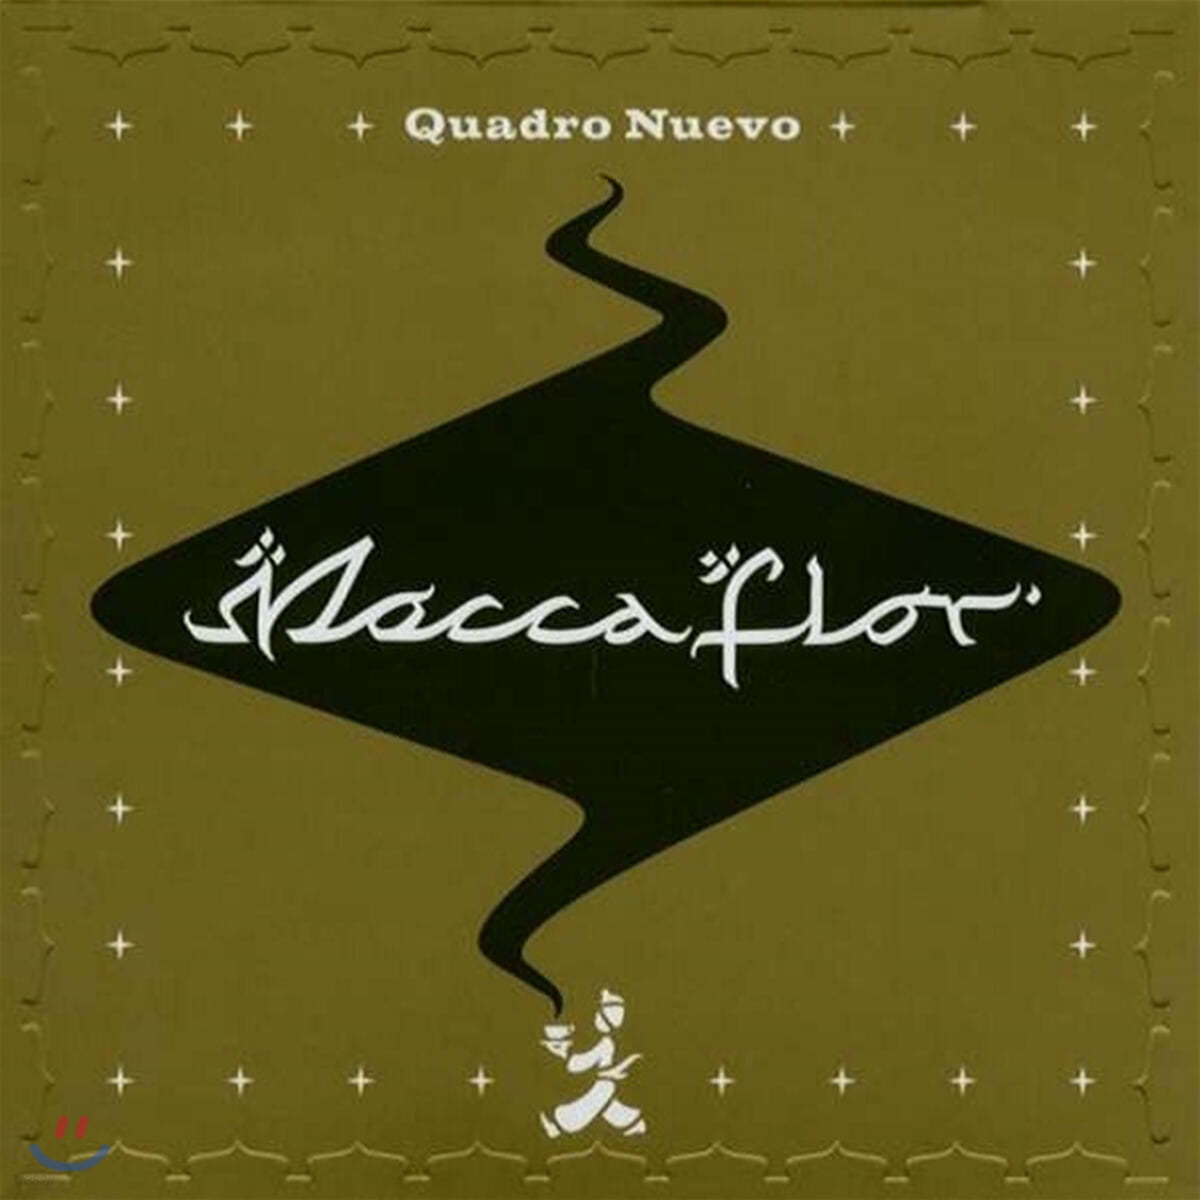 Quadro Nuevo (콰드로 누에보) - Mocca Flor [2LP]